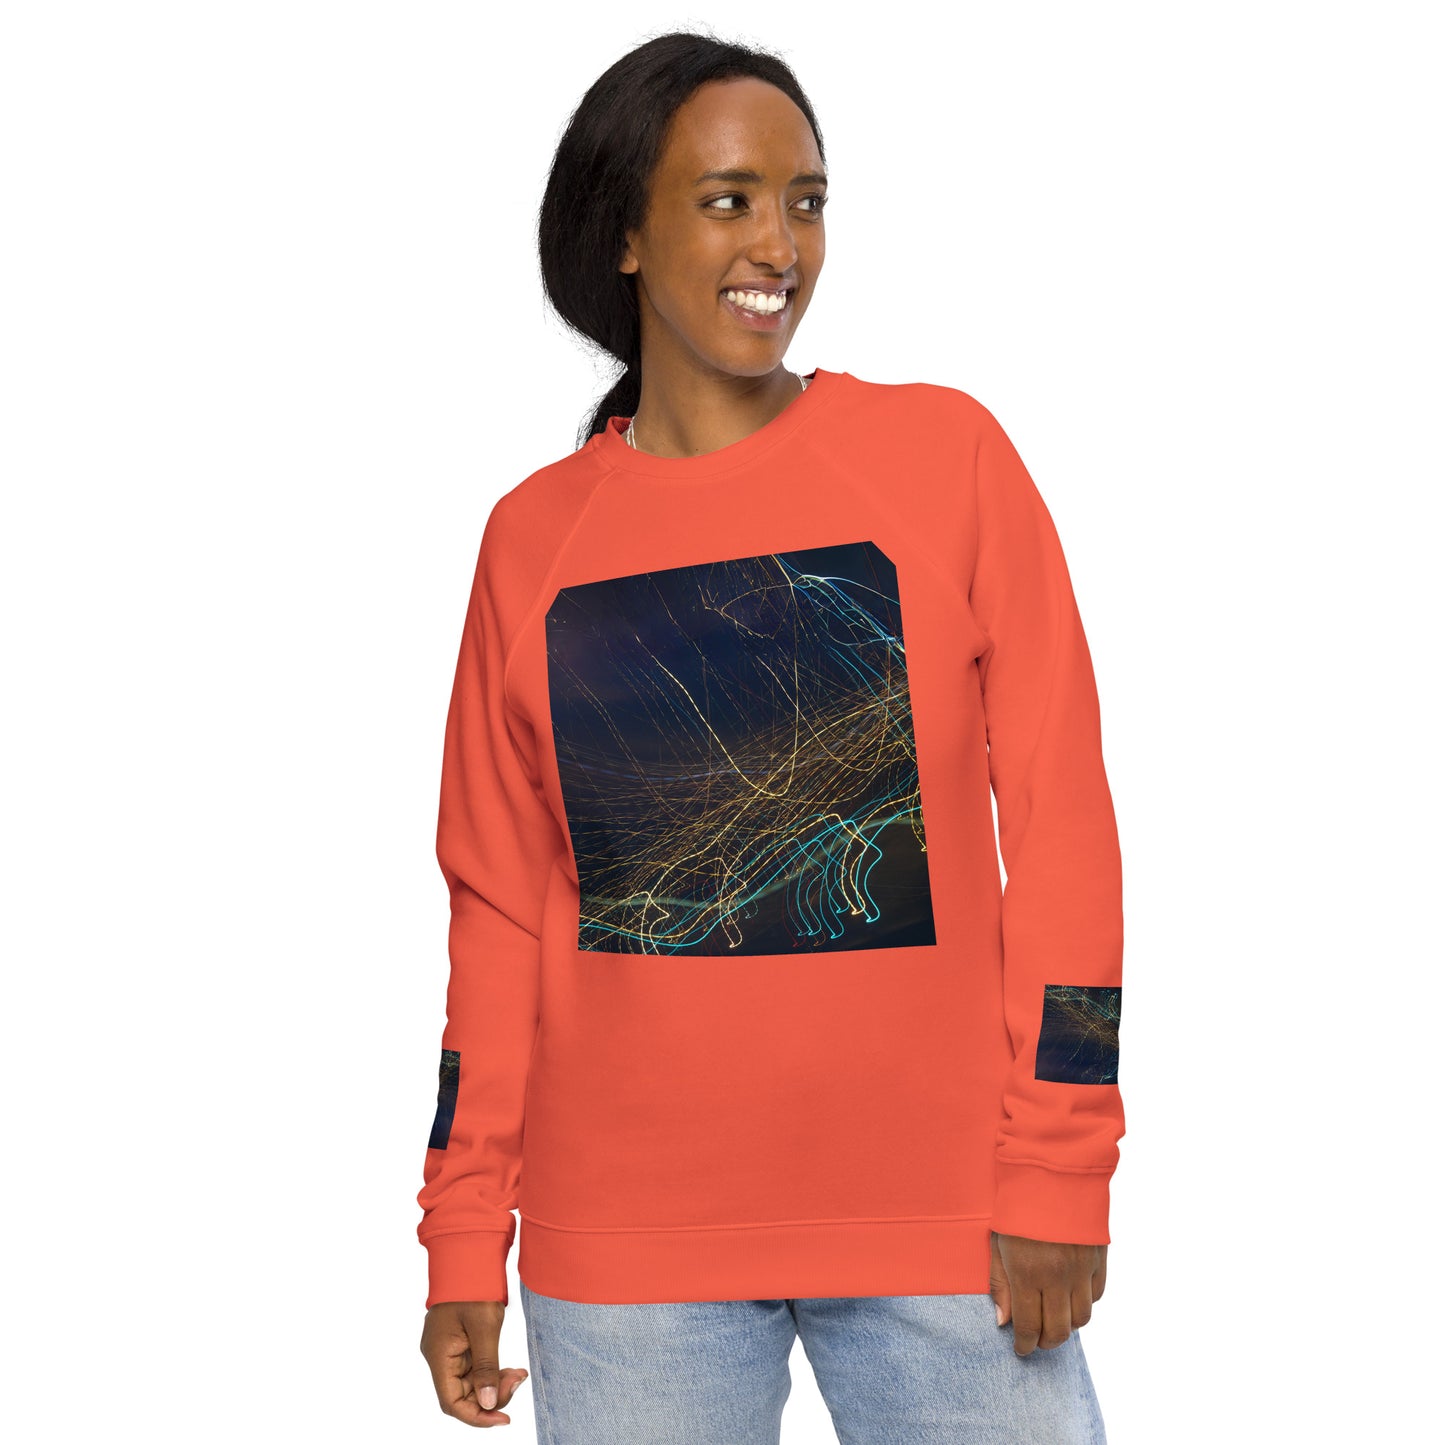 Eco-Chic Unisex Raglan Sweatshirt with Abstract Design - Shop Now!